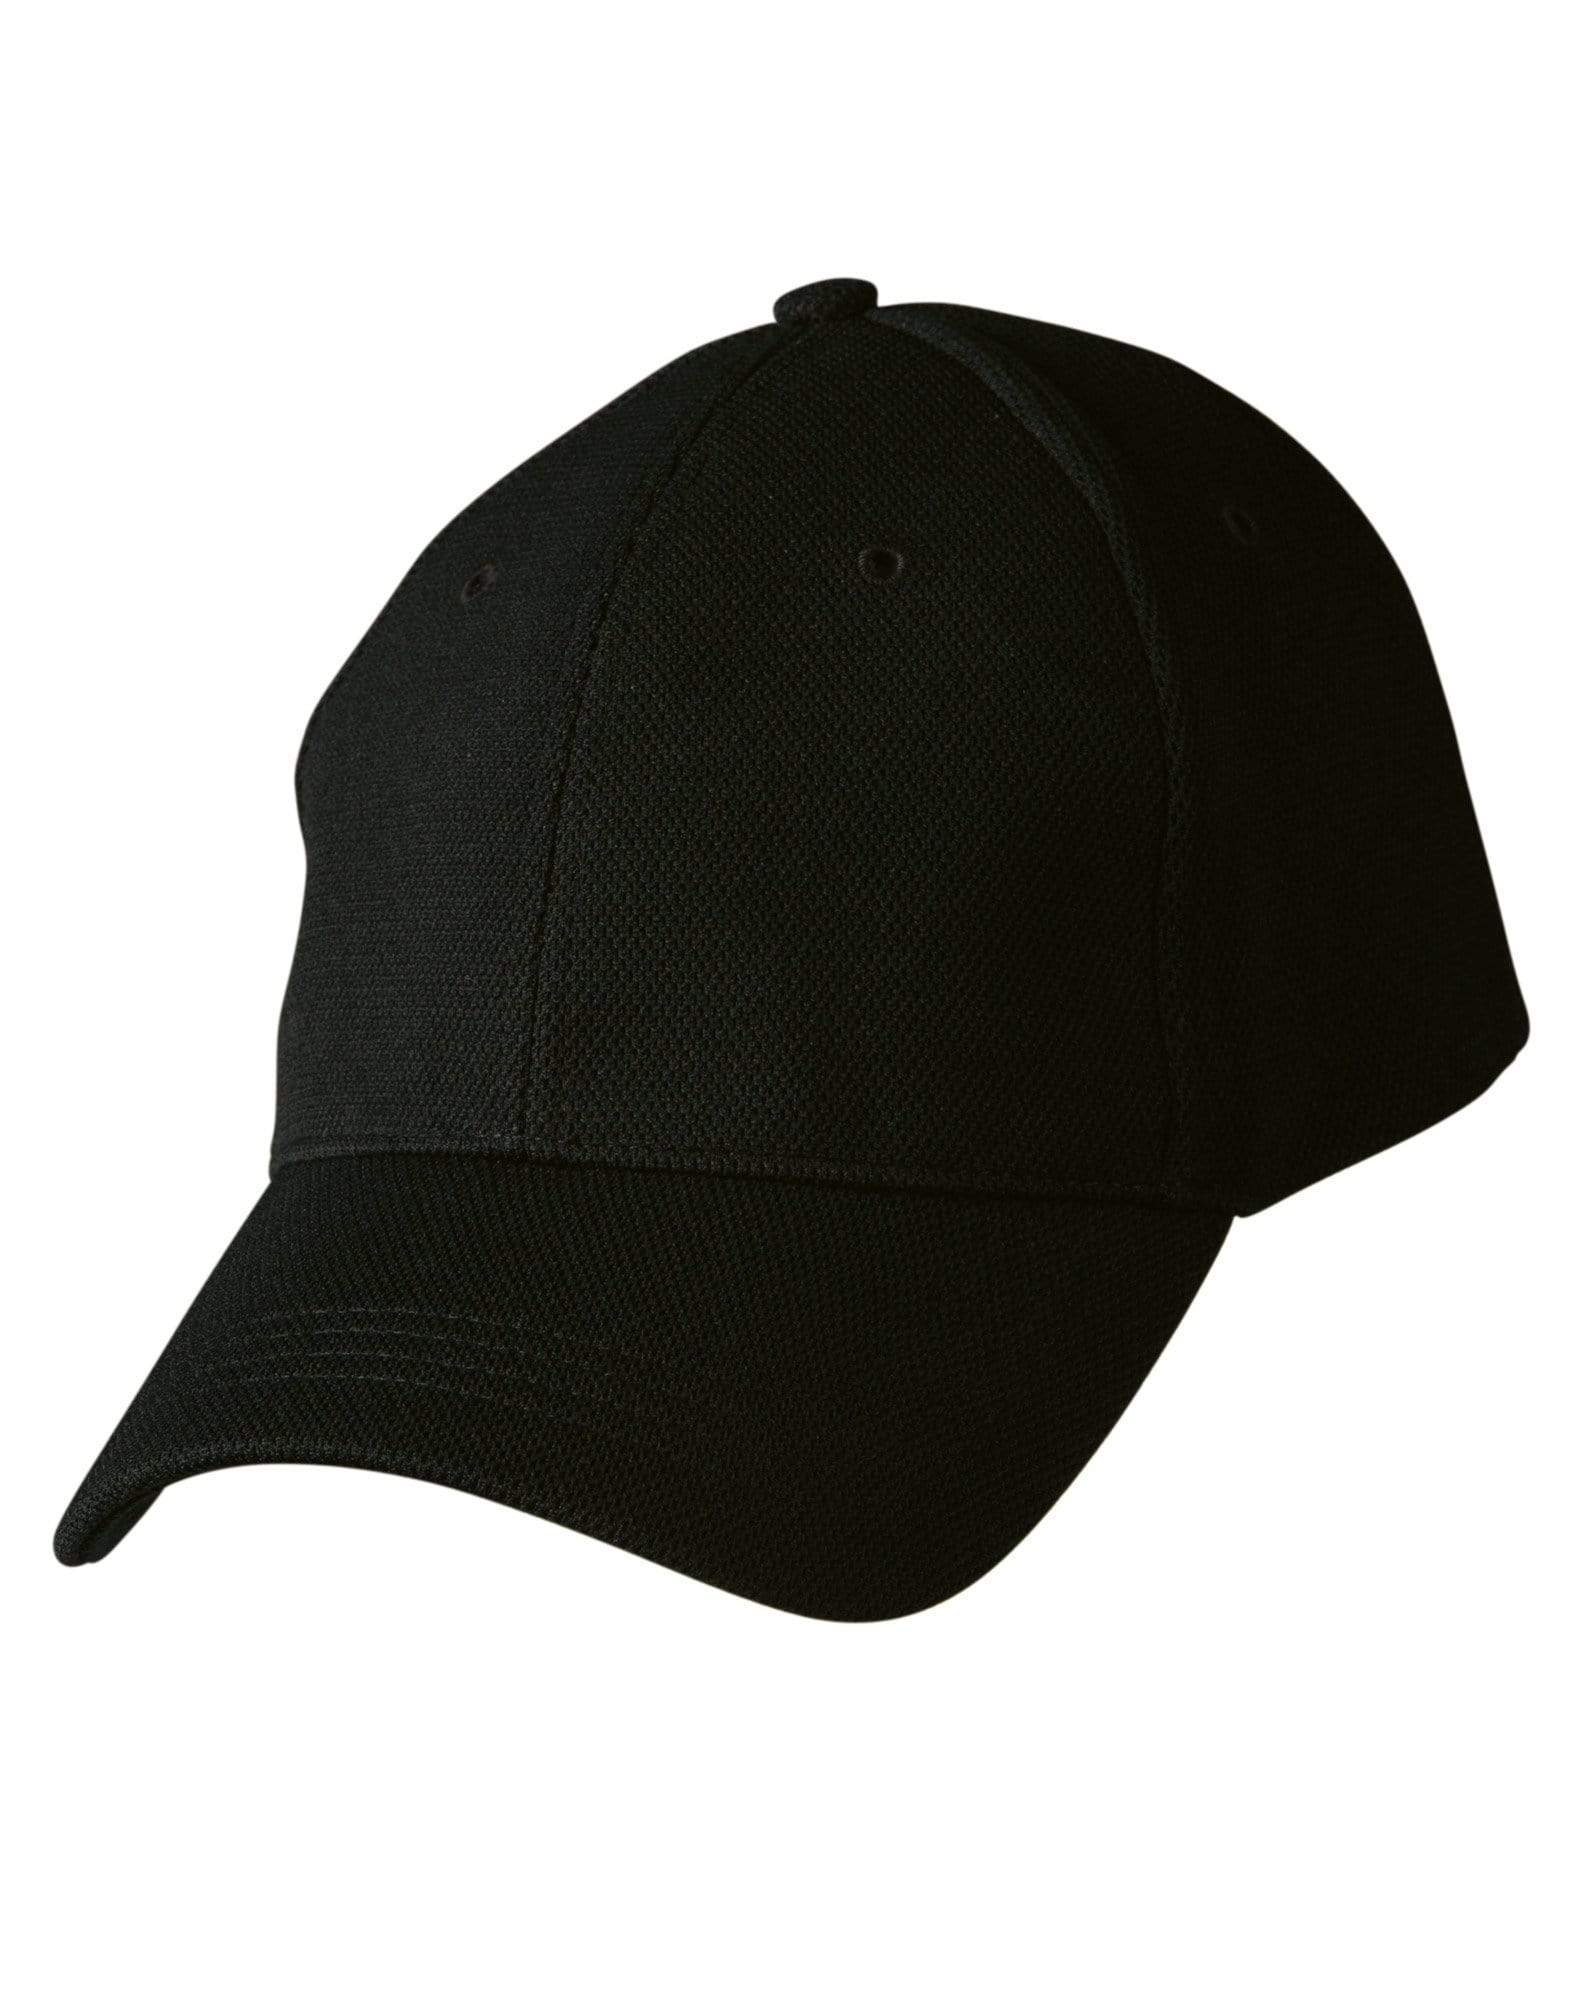 Pique Mesh Cap CH77 Active Wear Australian Industrial Wear Black One size 